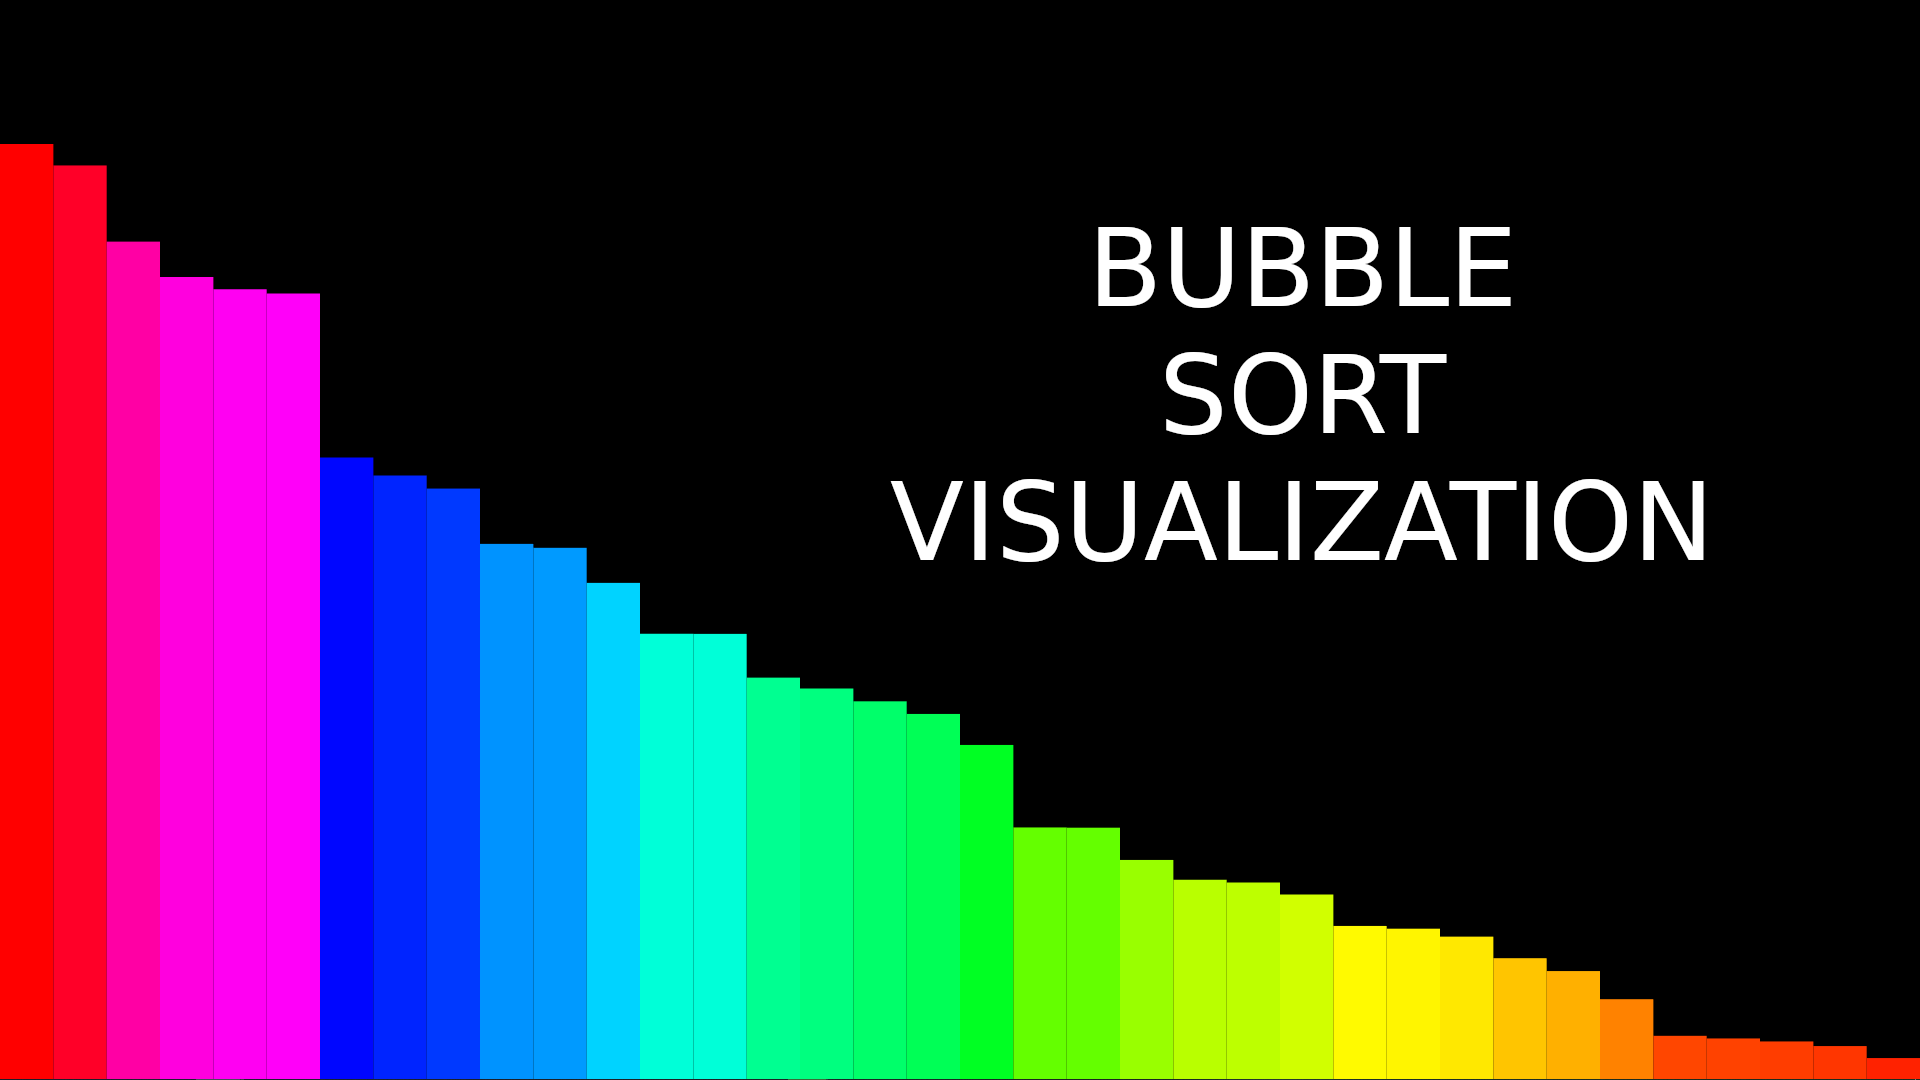 Bubble sort visualization image